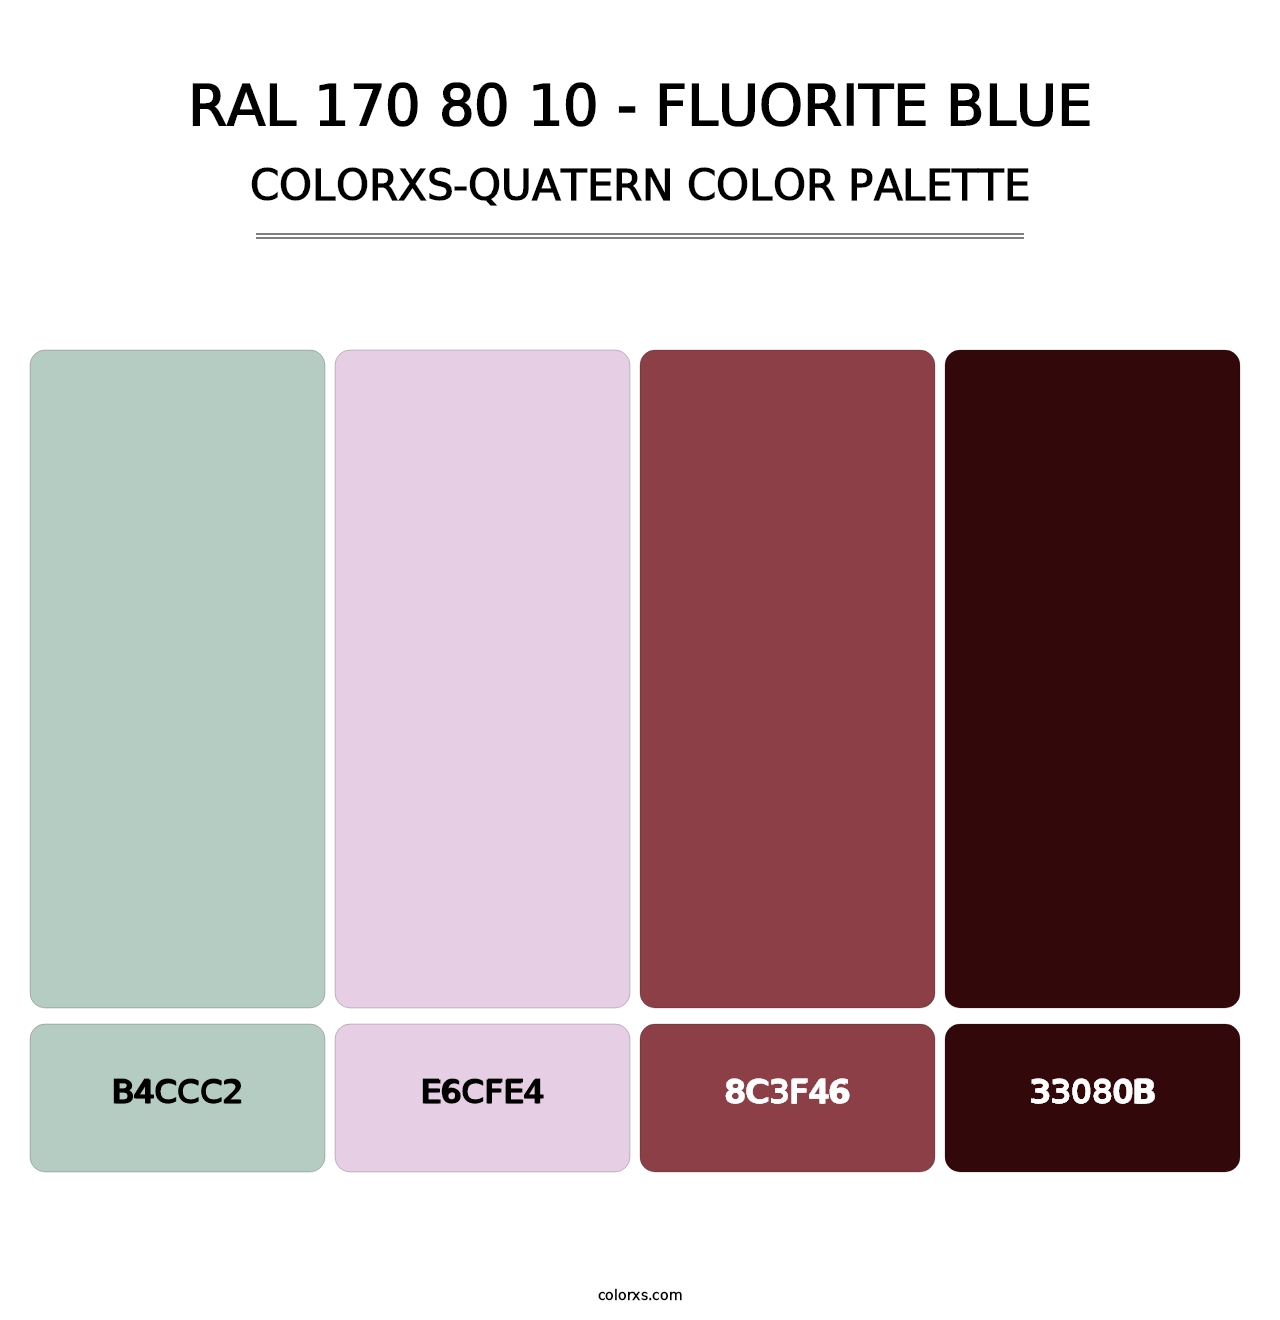 RAL 170 80 10 - Fluorite Blue - Colorxs Quatern Palette